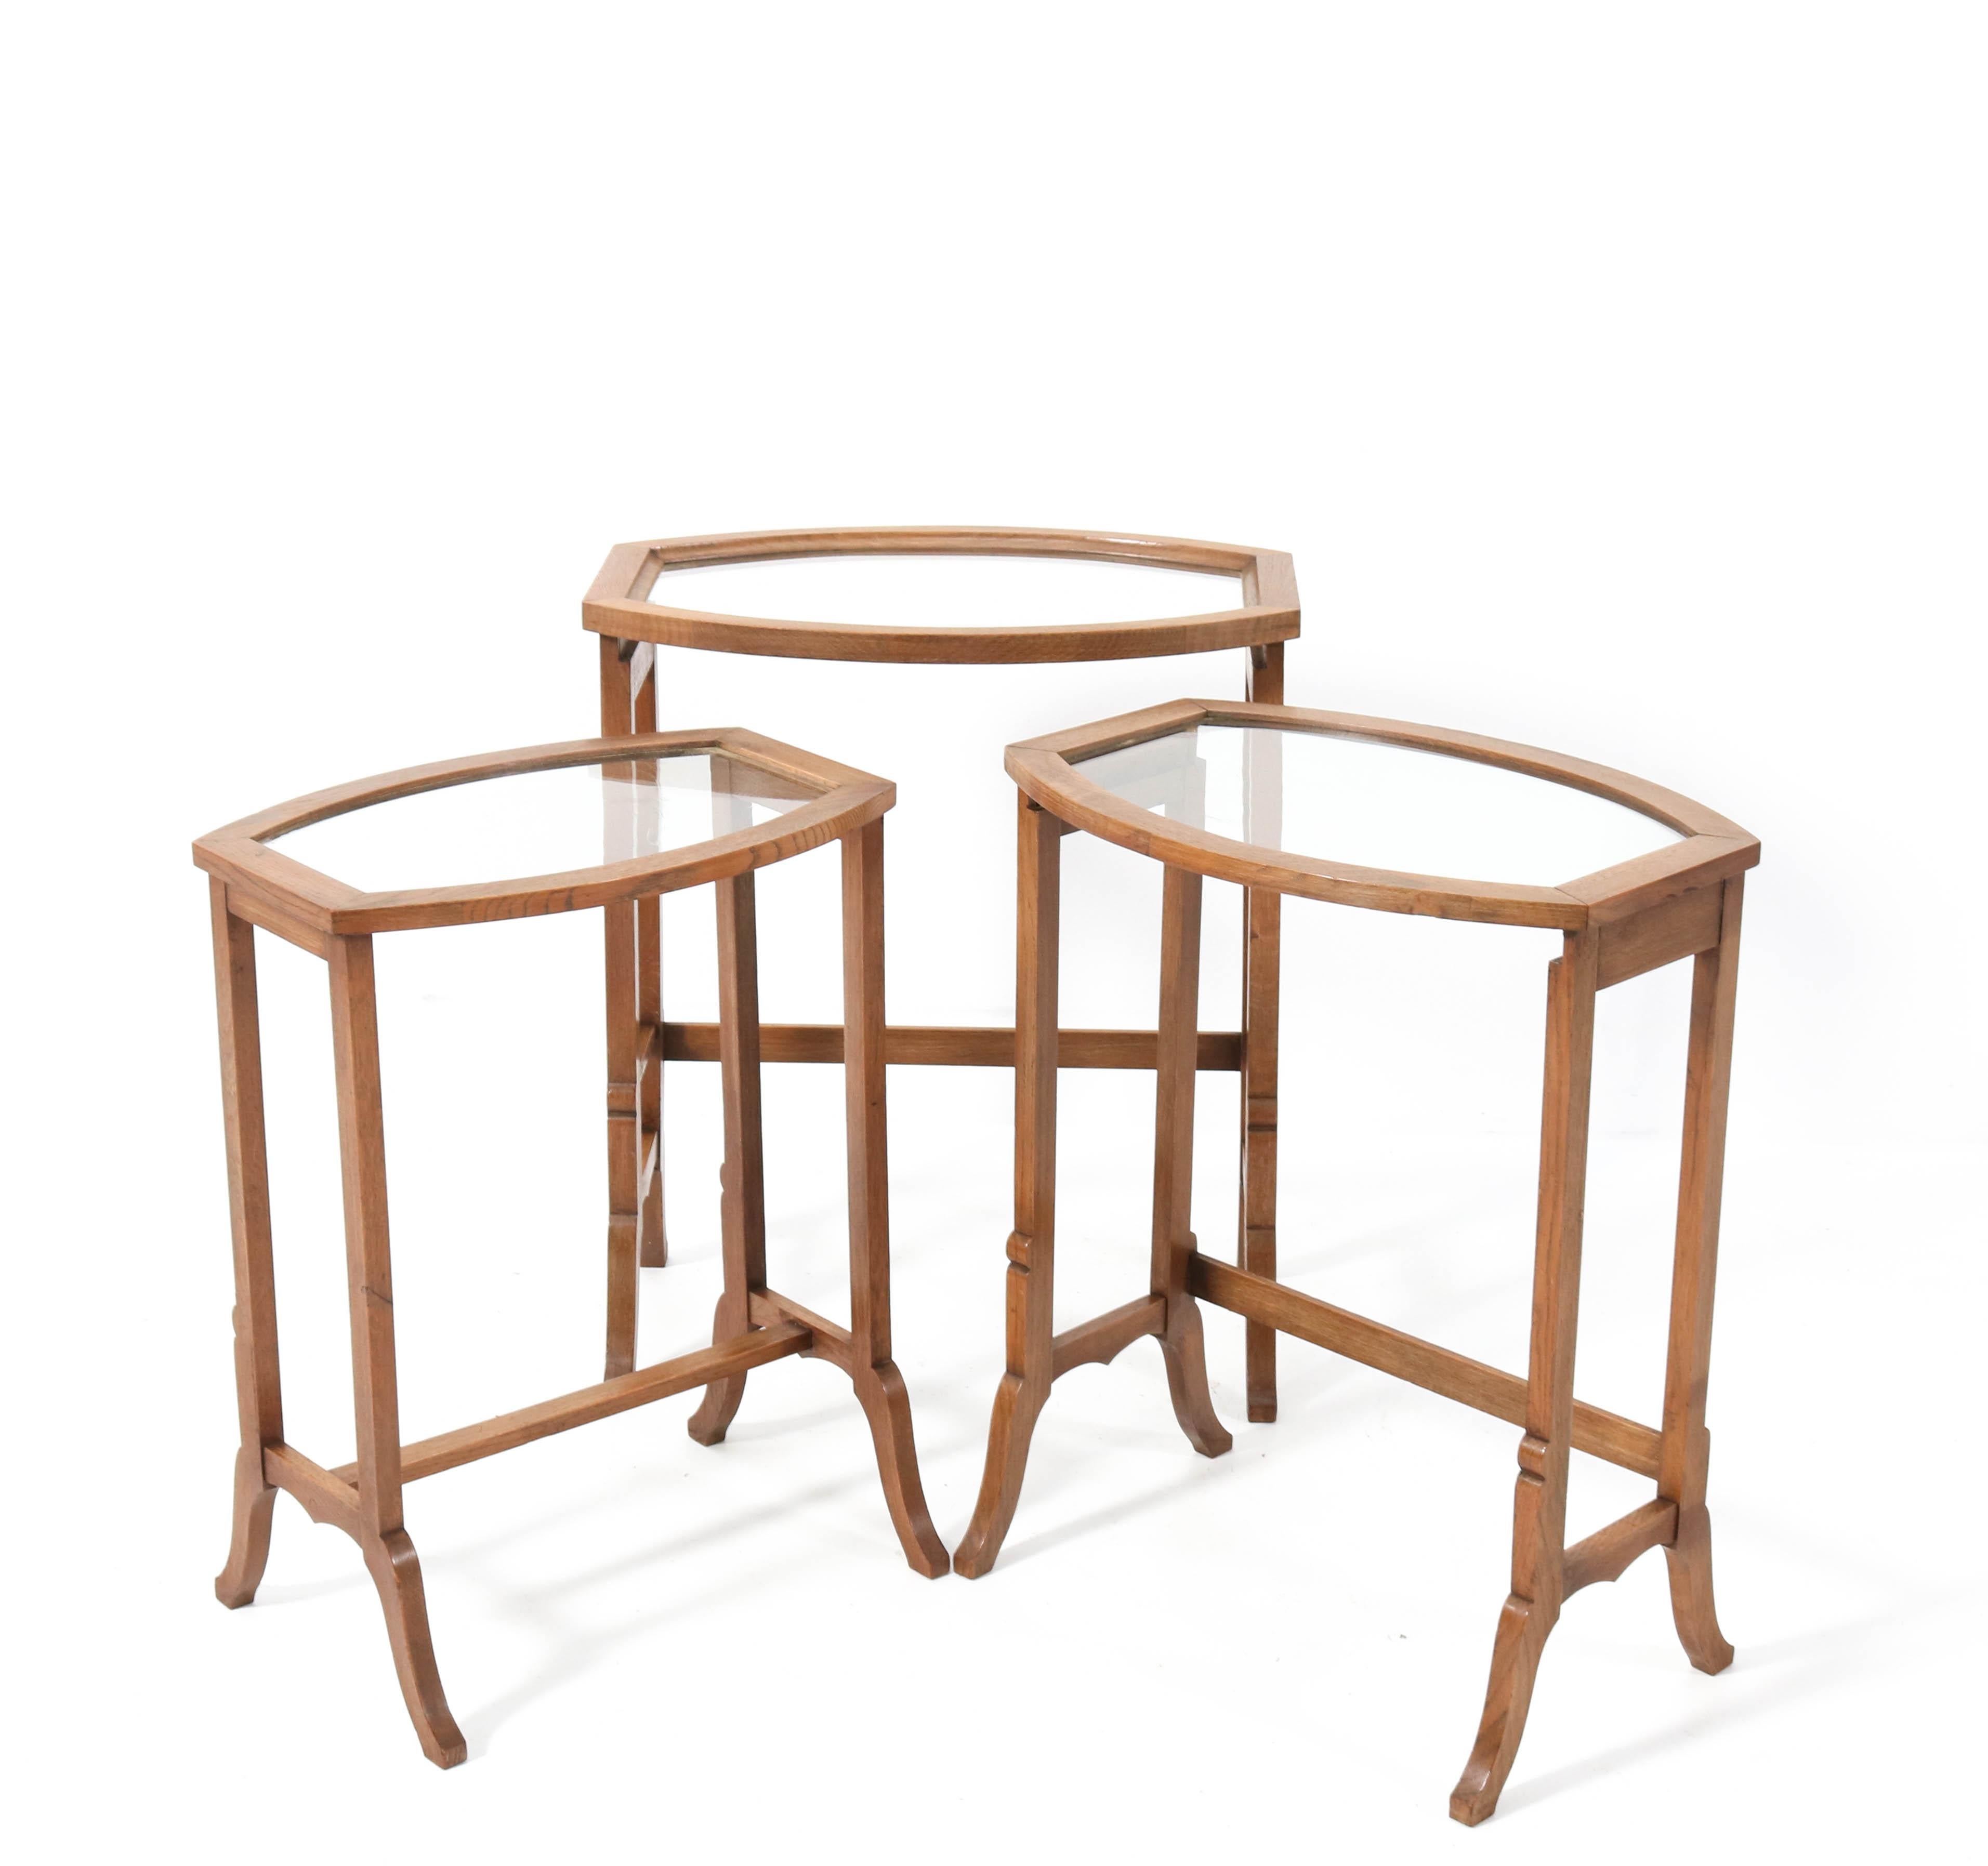 Oak Art Nouveau Nesting Tables with Glass Tops, 1900s For Sale 3